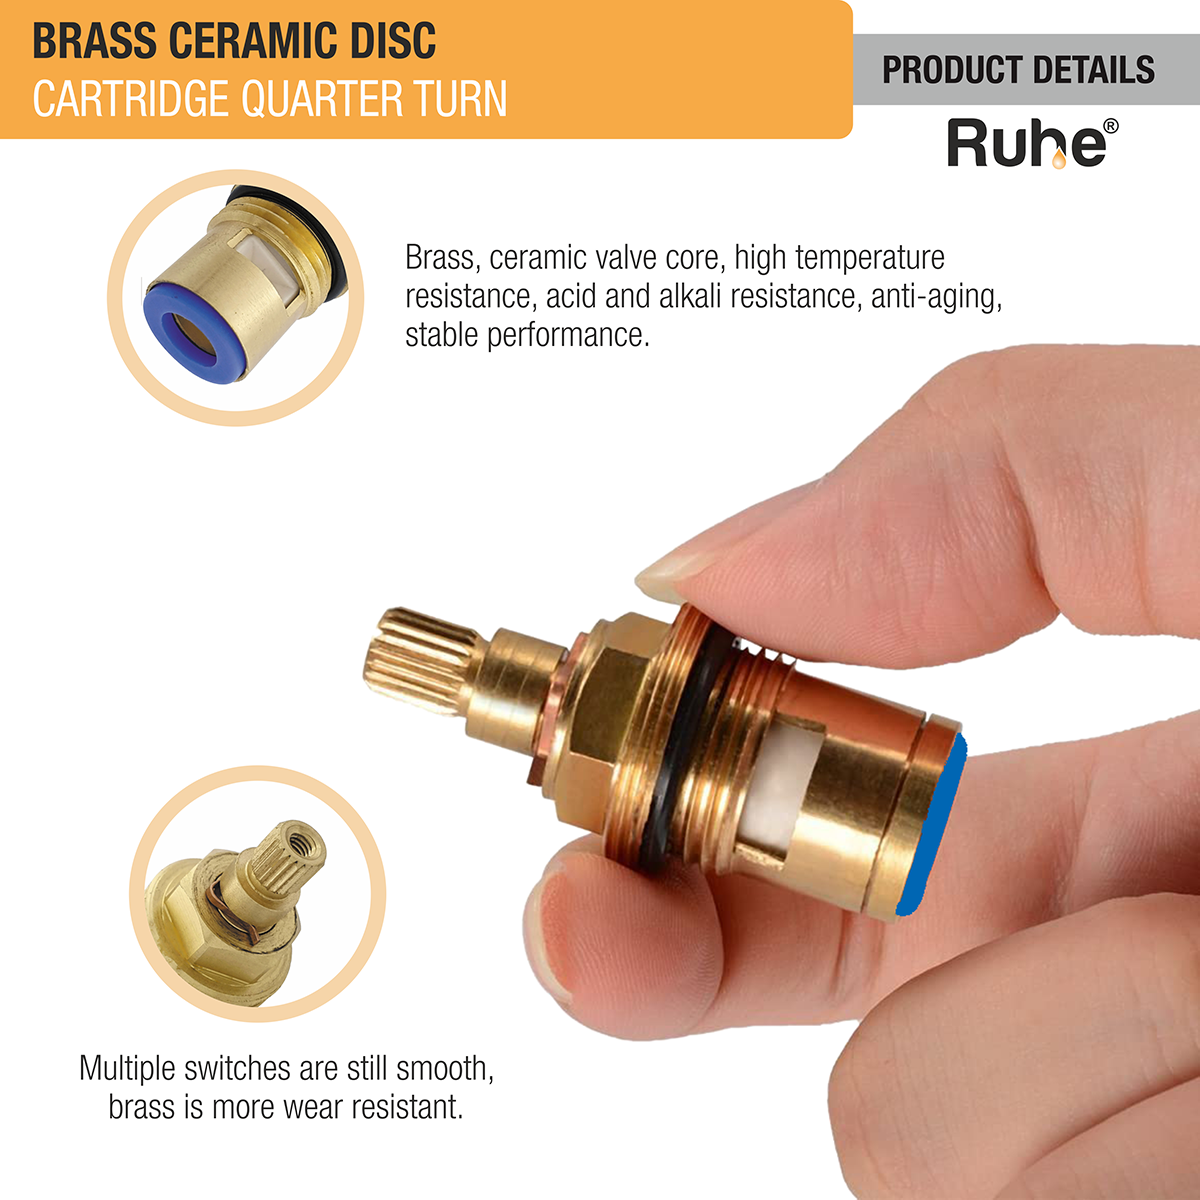 Brass Ceramic Disc Cartridge (Quarter-Turn) product details